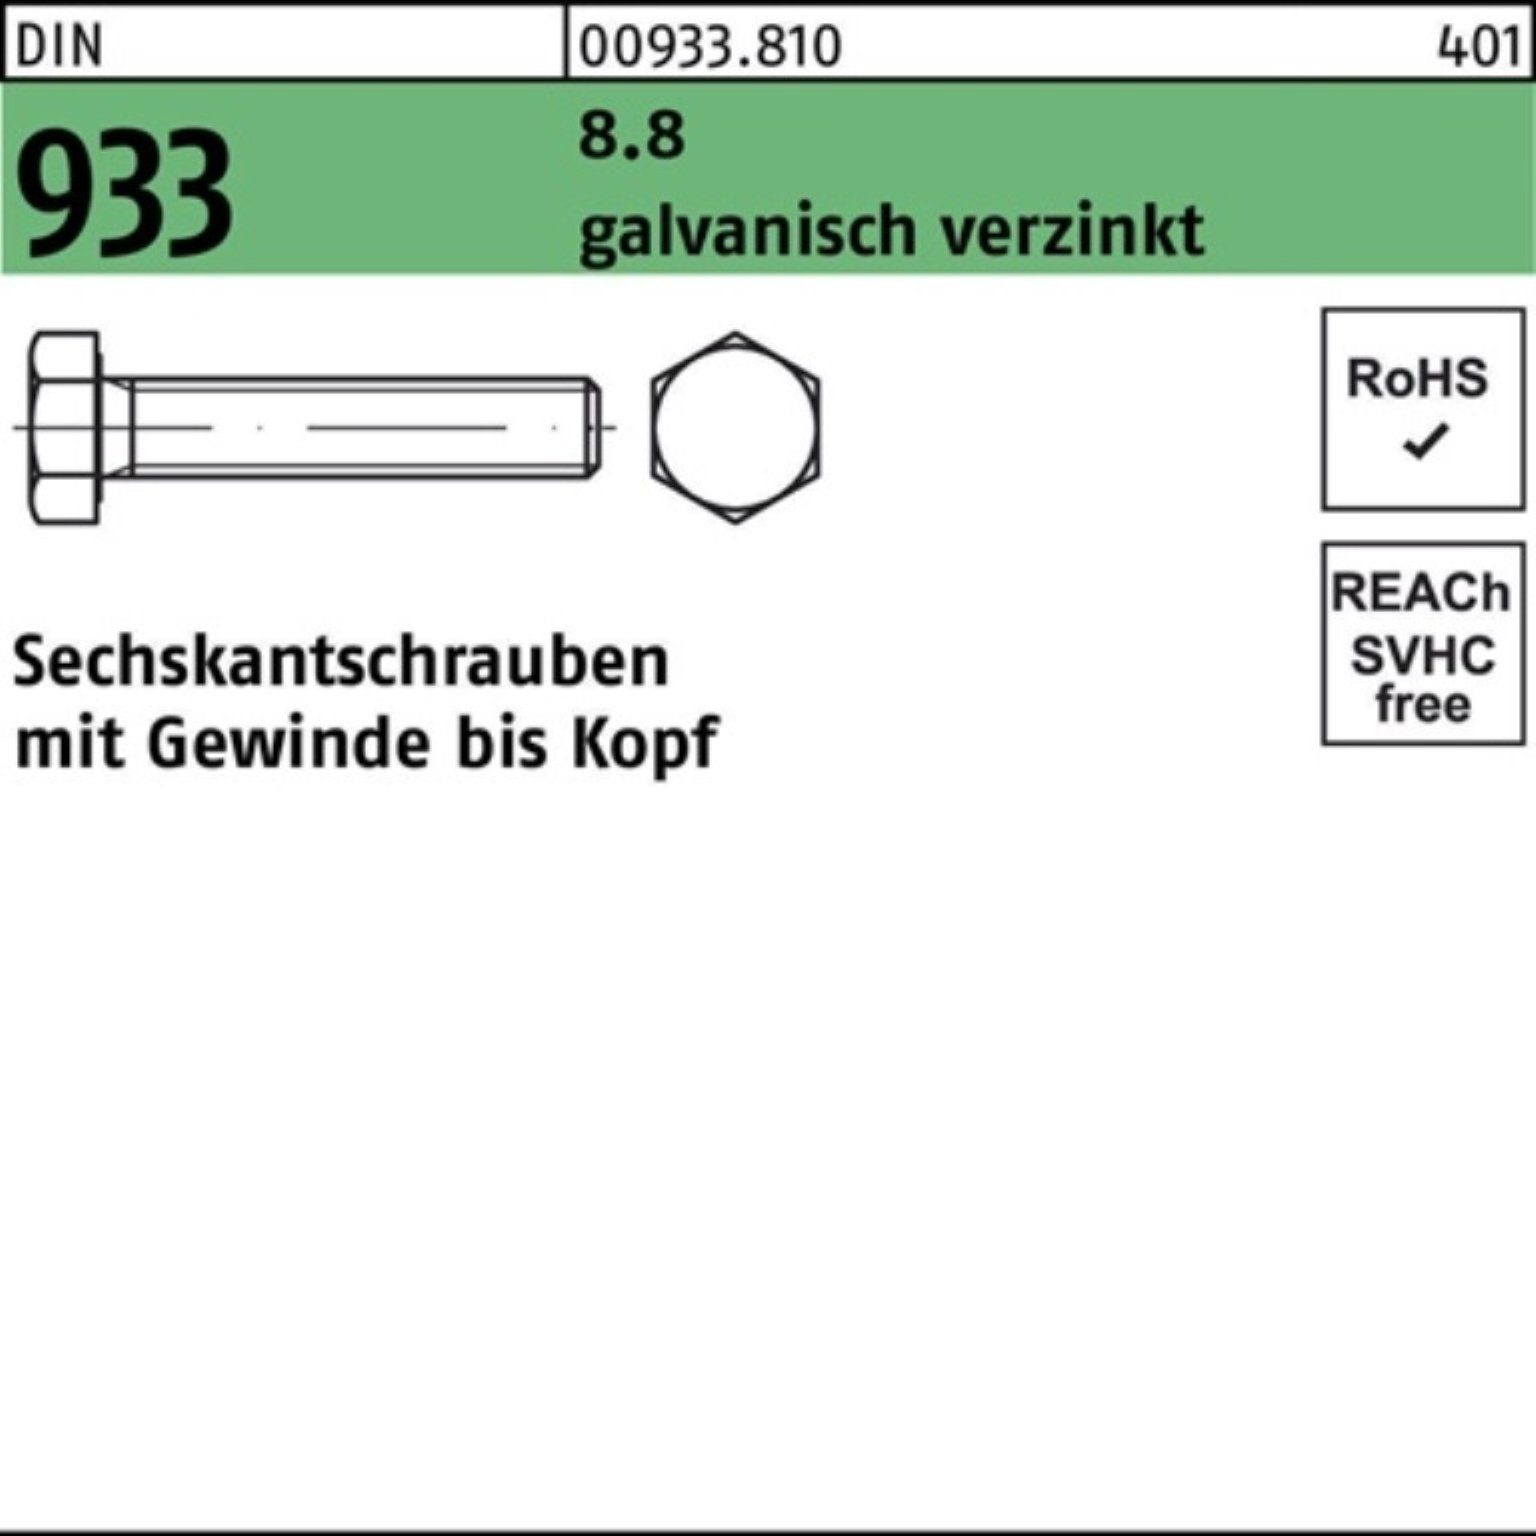 Reyher Sechskantschraube 100er Pack DIN 110 933 St VG 8.8 galv.verz. Sechskantschraube M16x 25